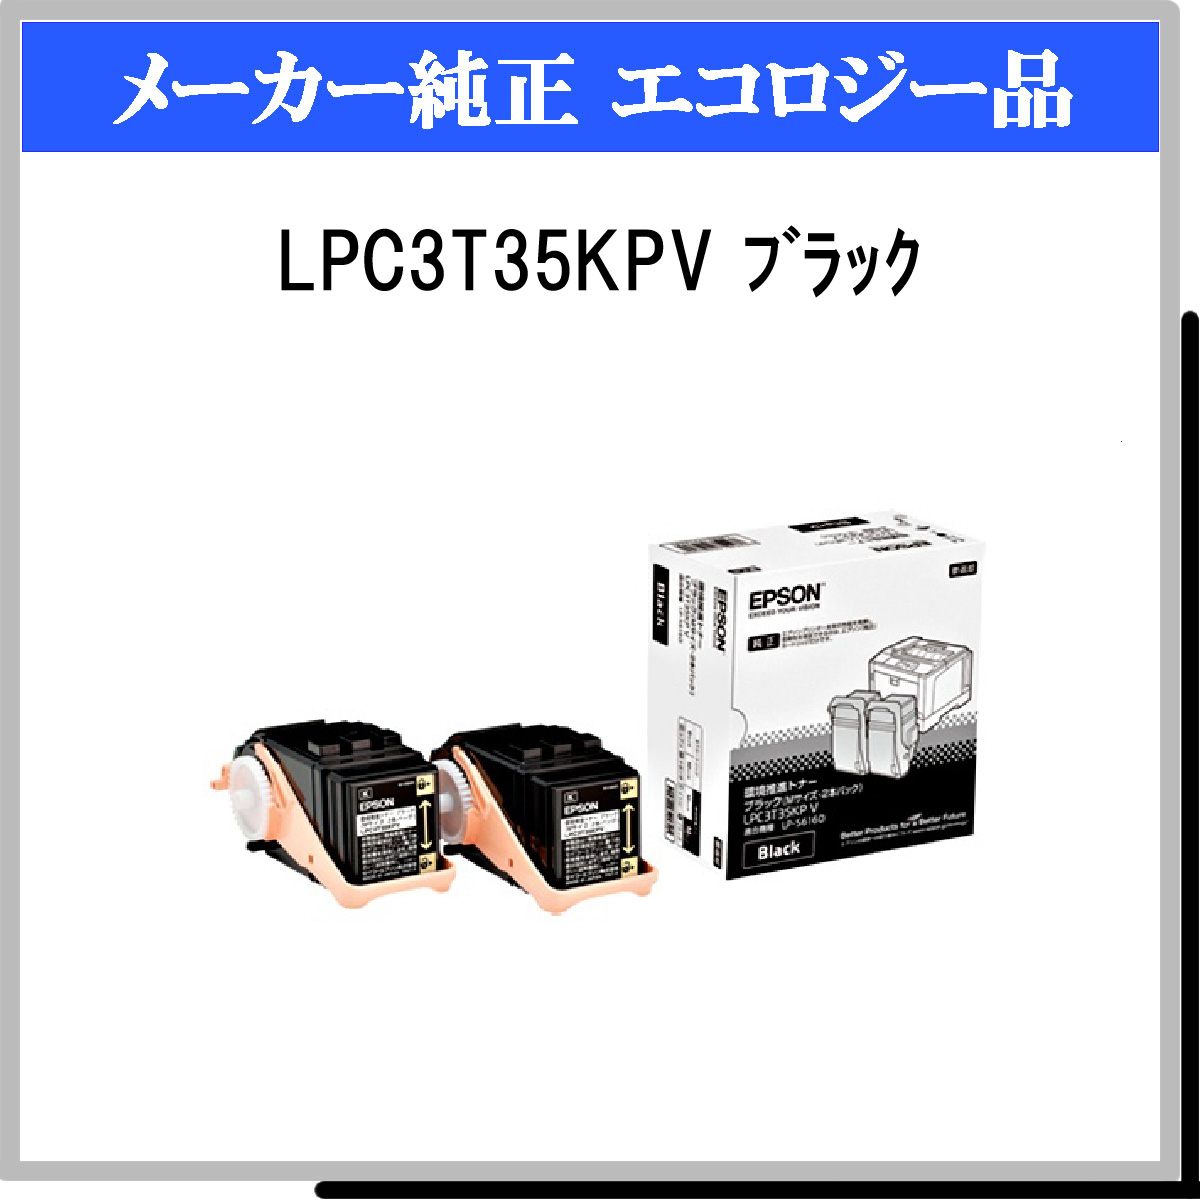 LPC3T35KPV (2P) 環境推進ﾄﾅｰ